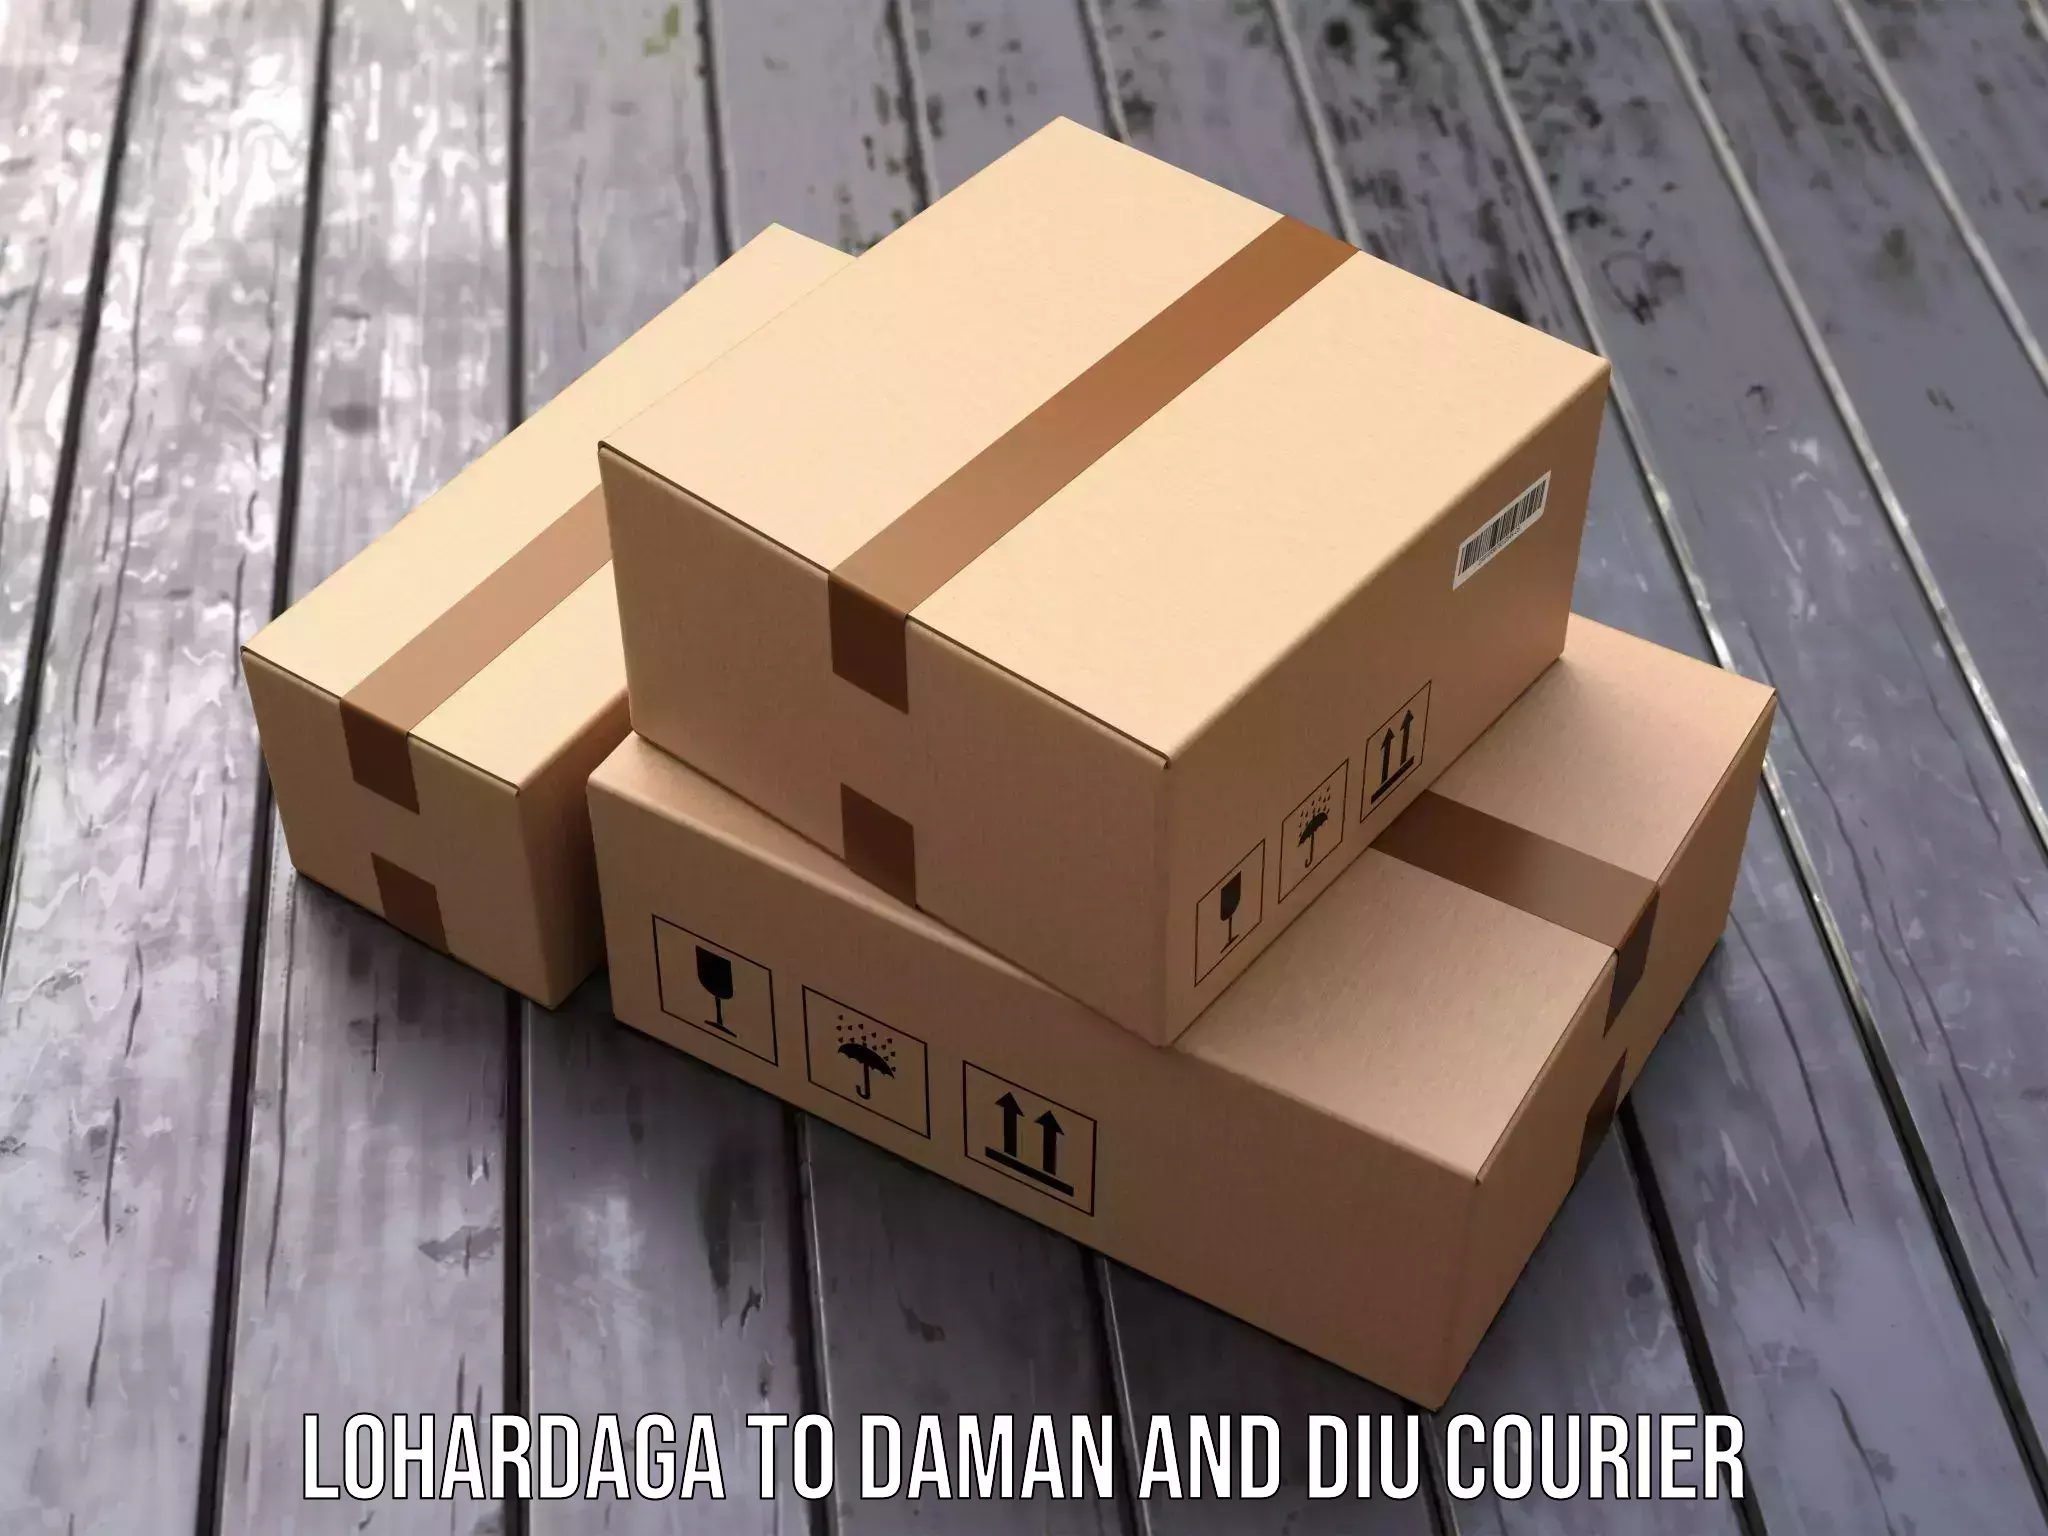 Express courier capabilities in Lohardaga to Diu